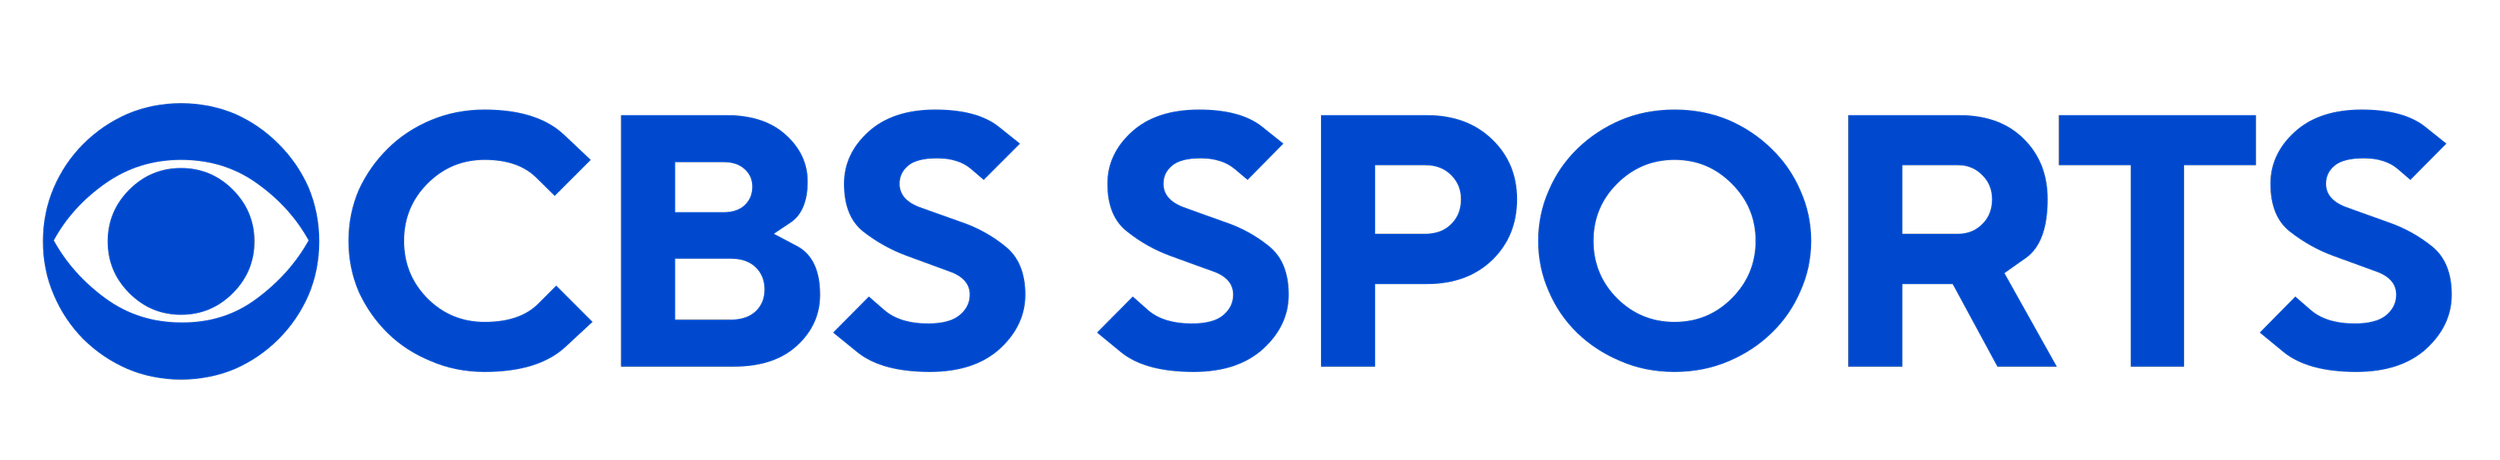 cbs-sports-logo-0.png